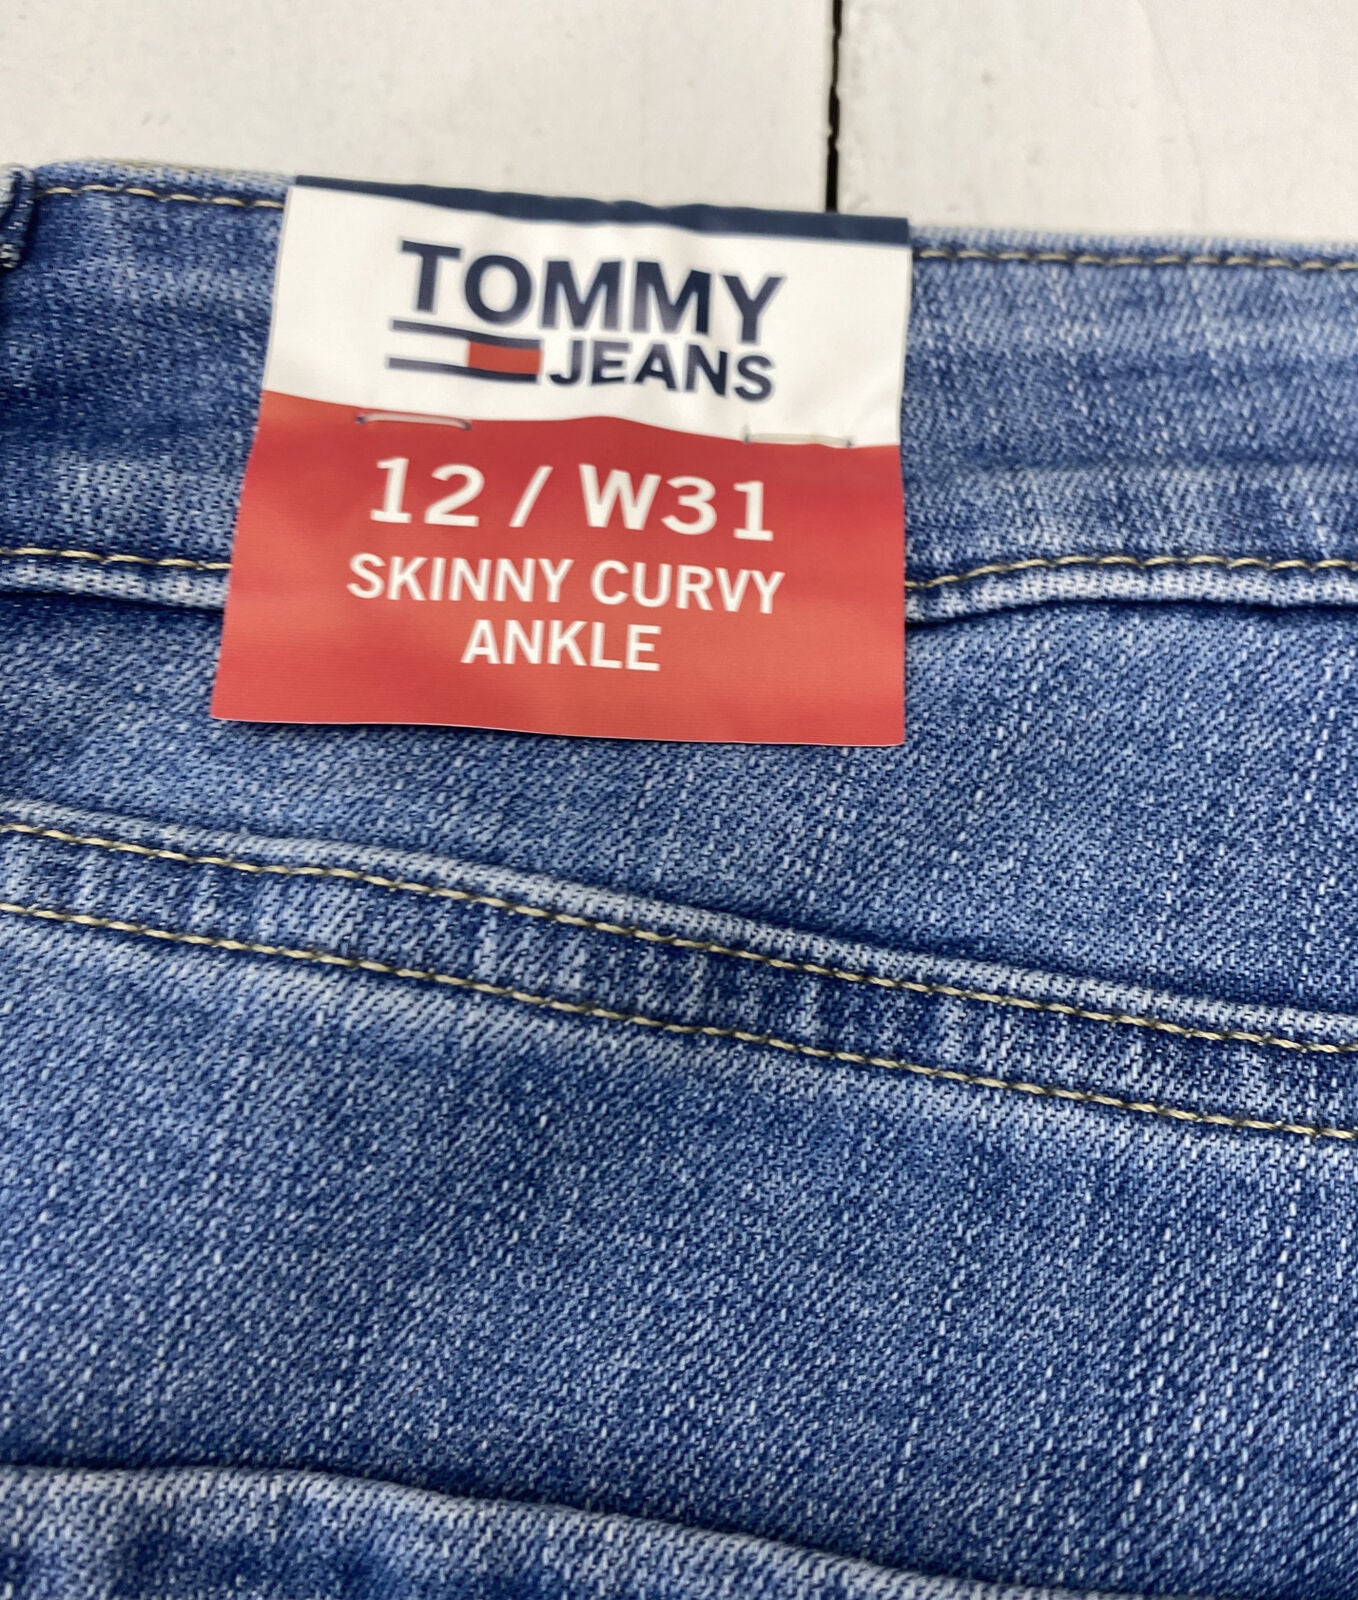 Tommy Hilfiger Skinny Curvy Ankle Jean TOBKOFZC Womens Size 12/31 New -  beyond exchange